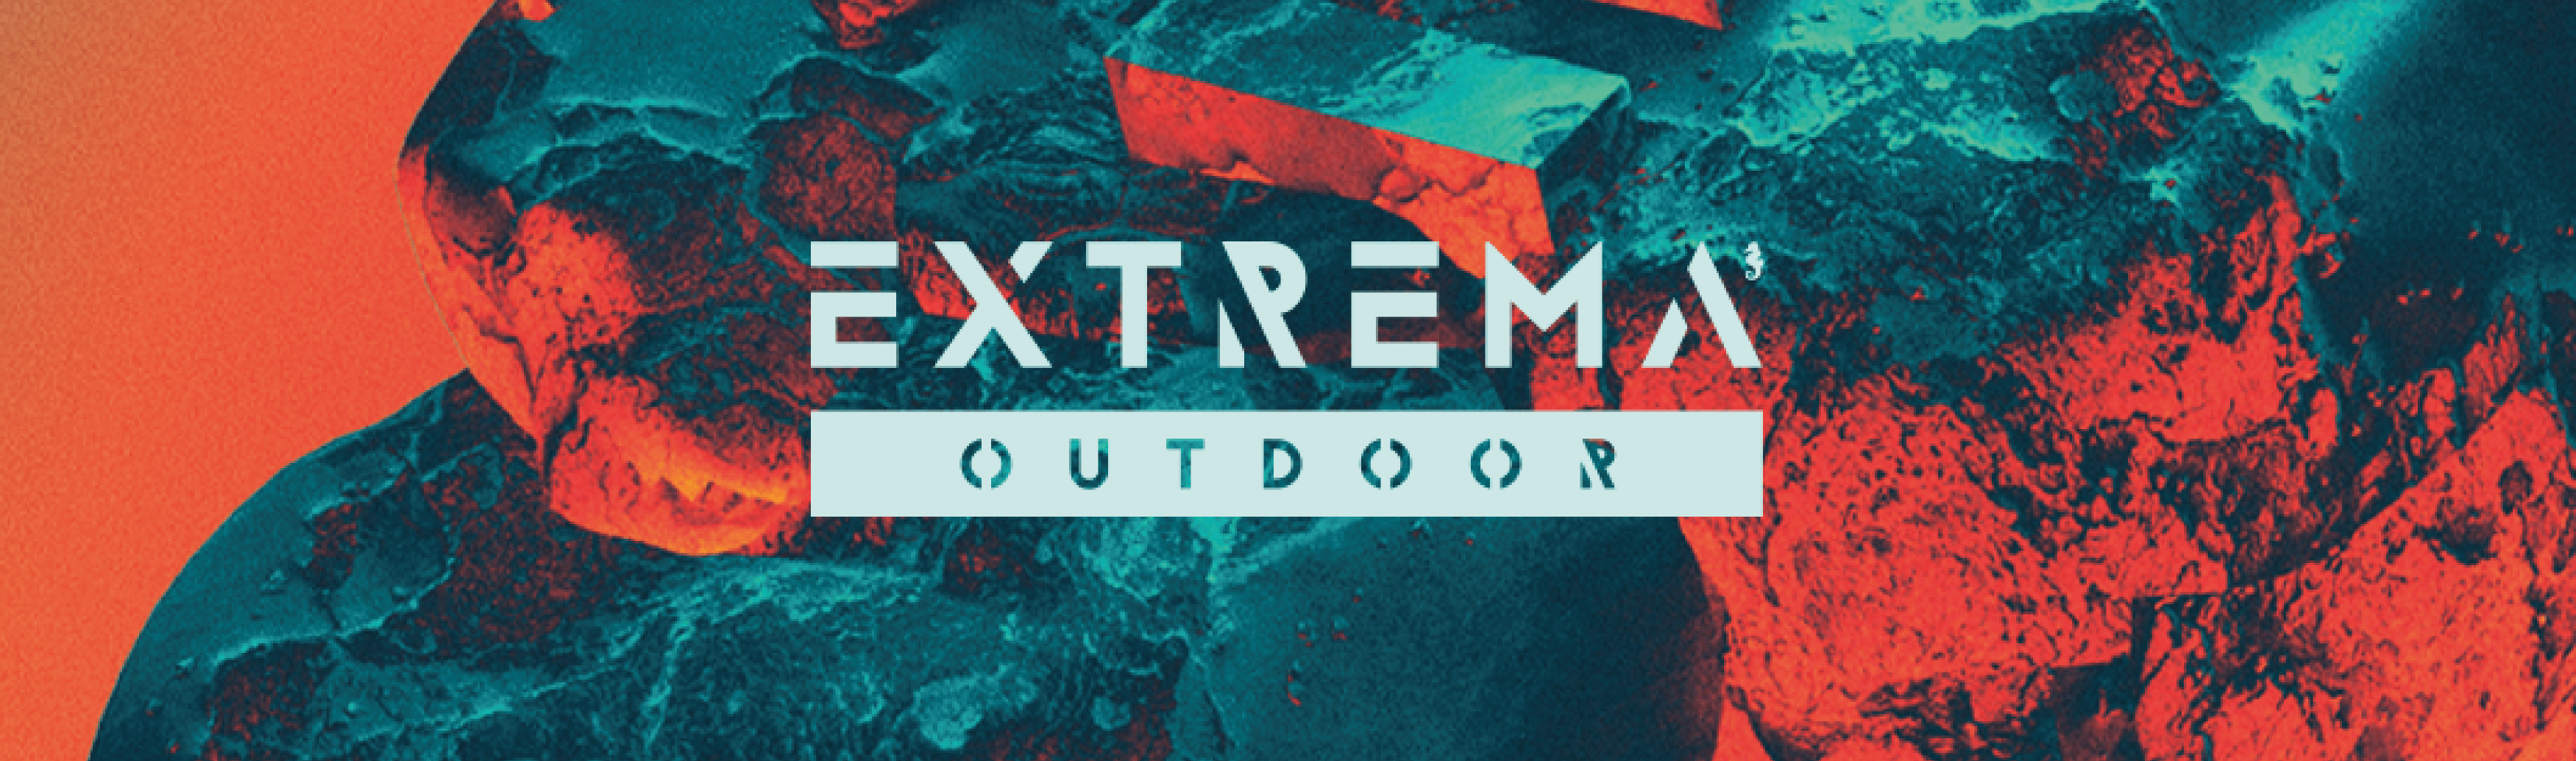 Extrema Outdoor banner_large_desktop